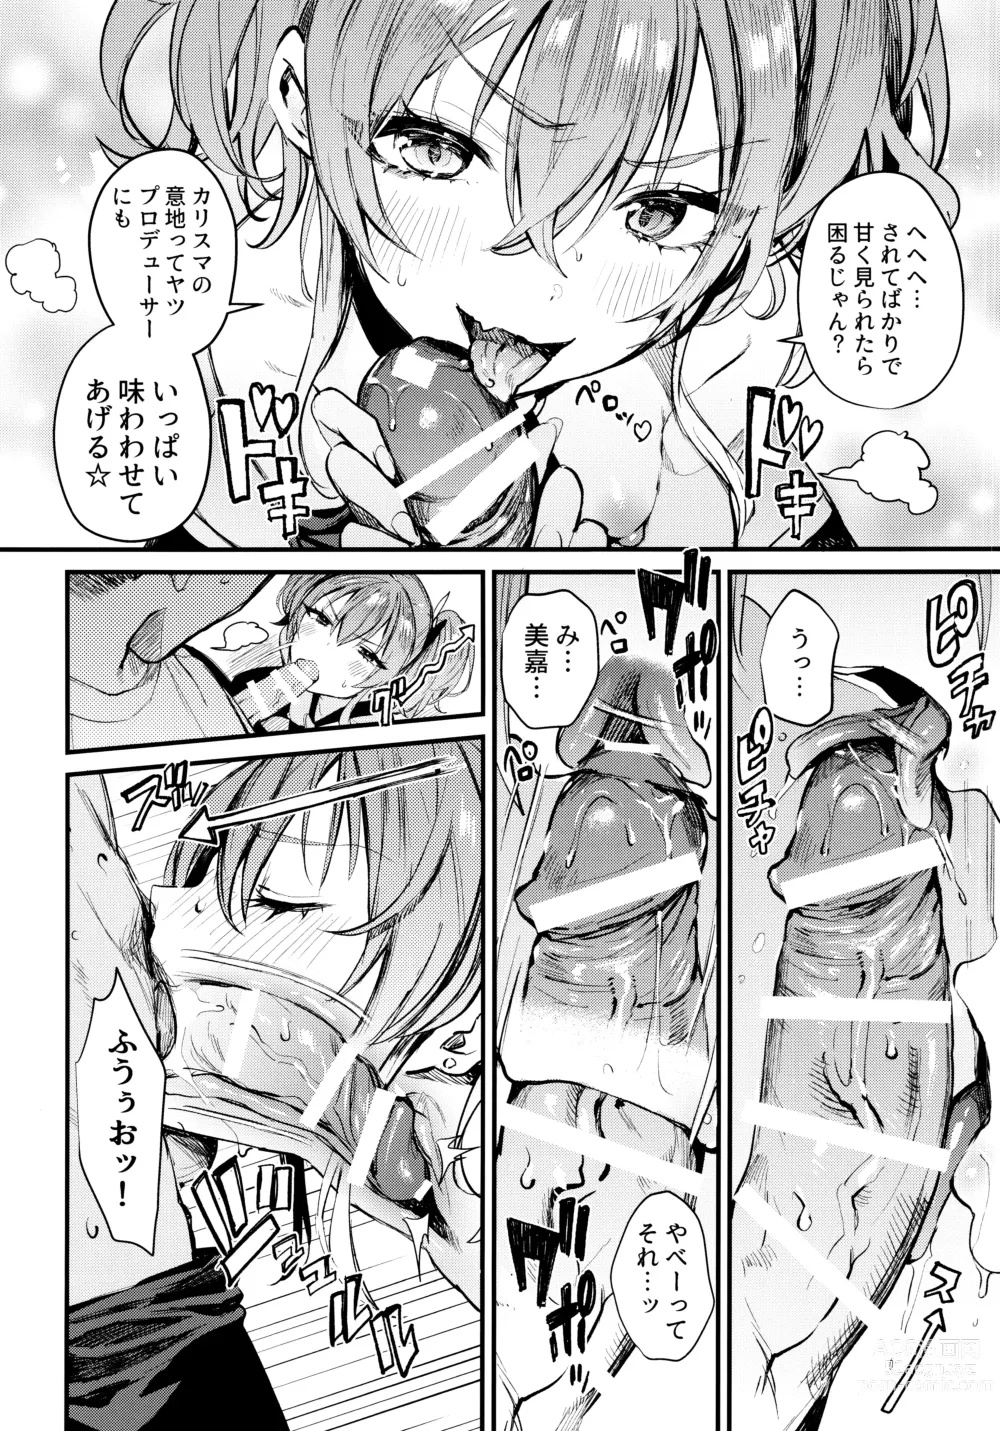 Page 13 of doujinshi Mika to Futari de.